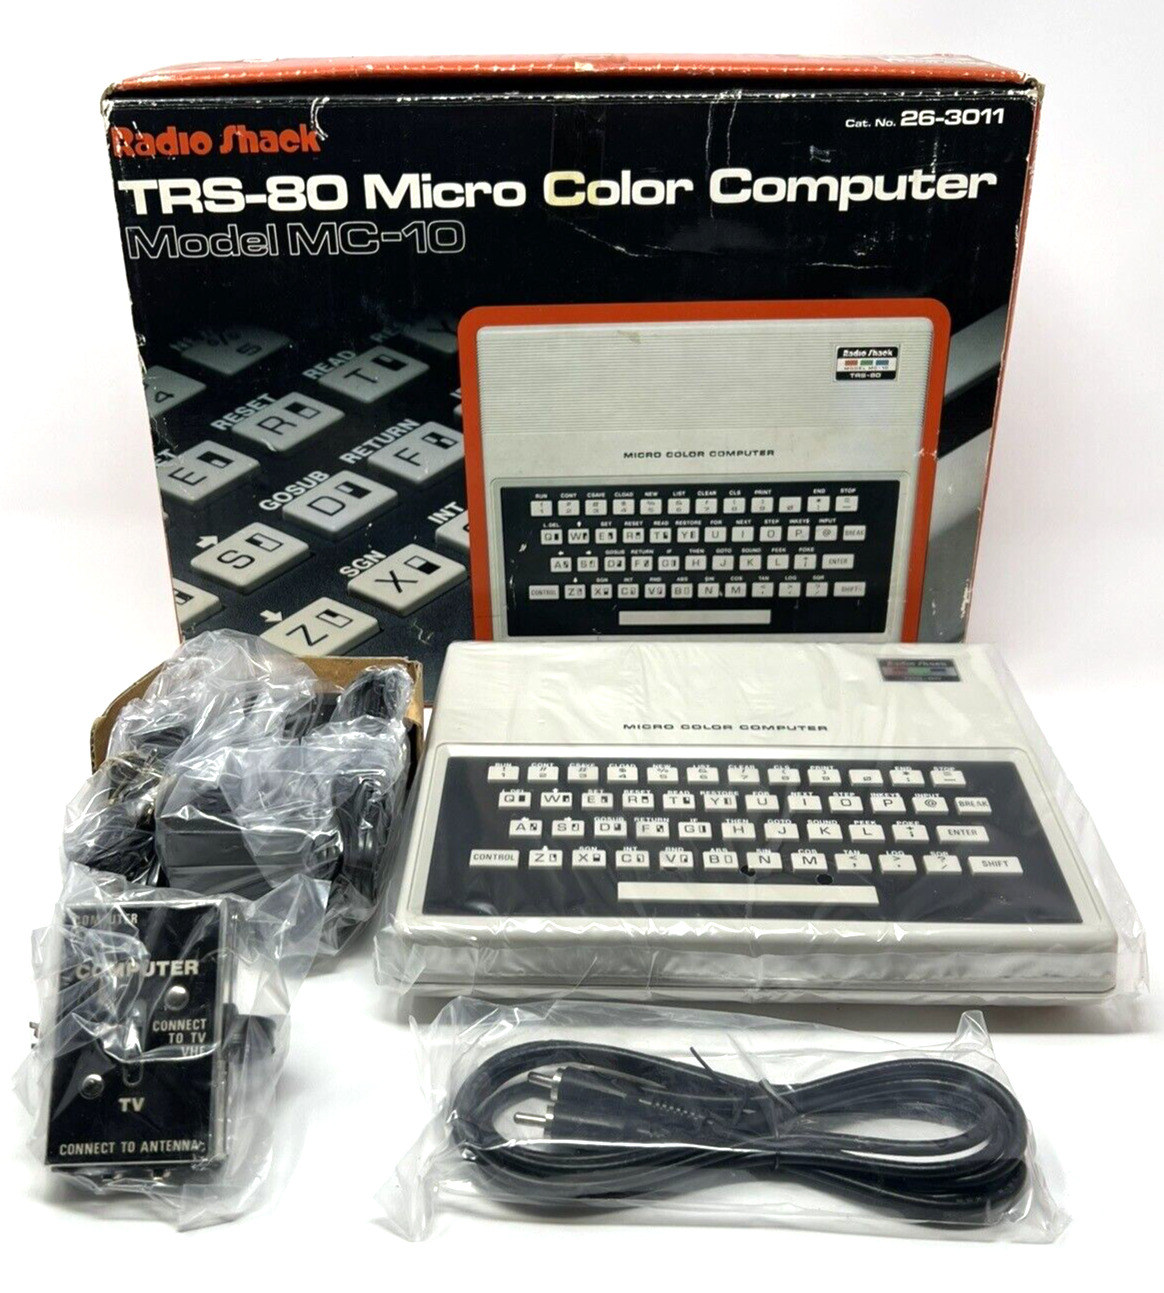 Radio Shack TRS-80 Micro Color Computer MC-10 26-3011 Tandy 1983 - New Open Box